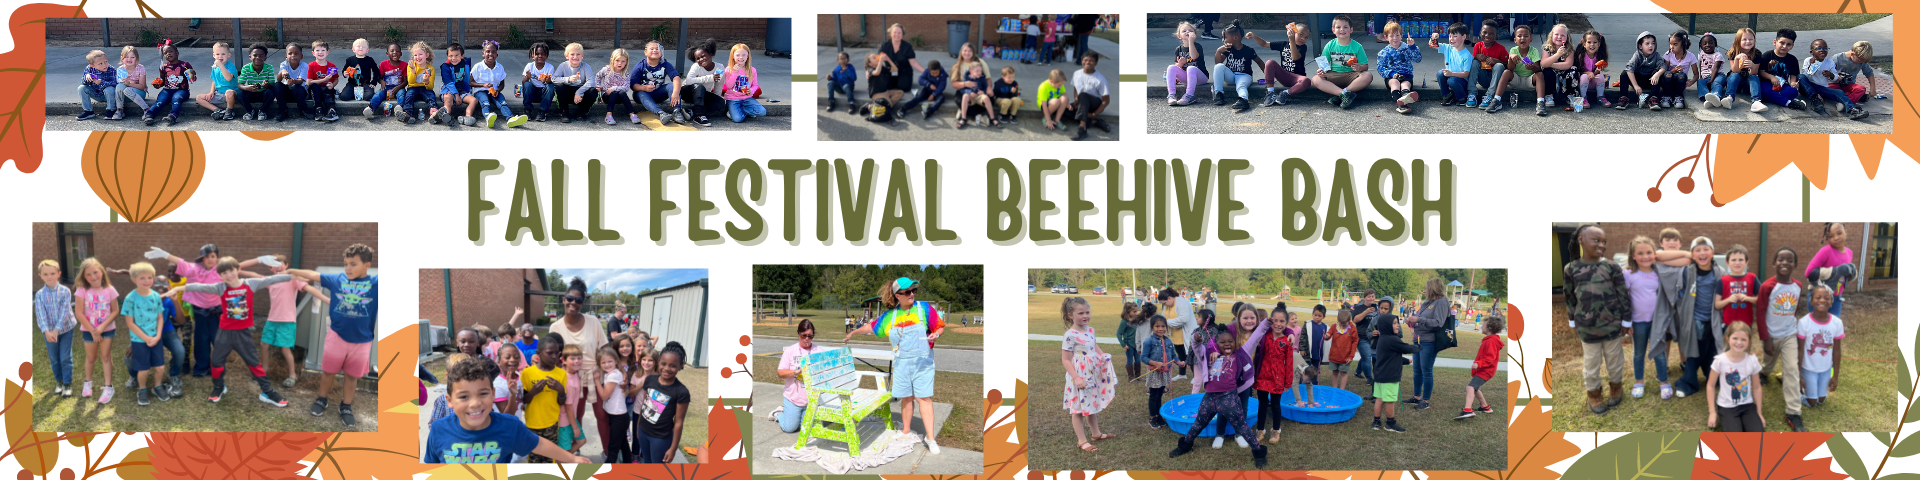 Fall Festival Beehive Bash